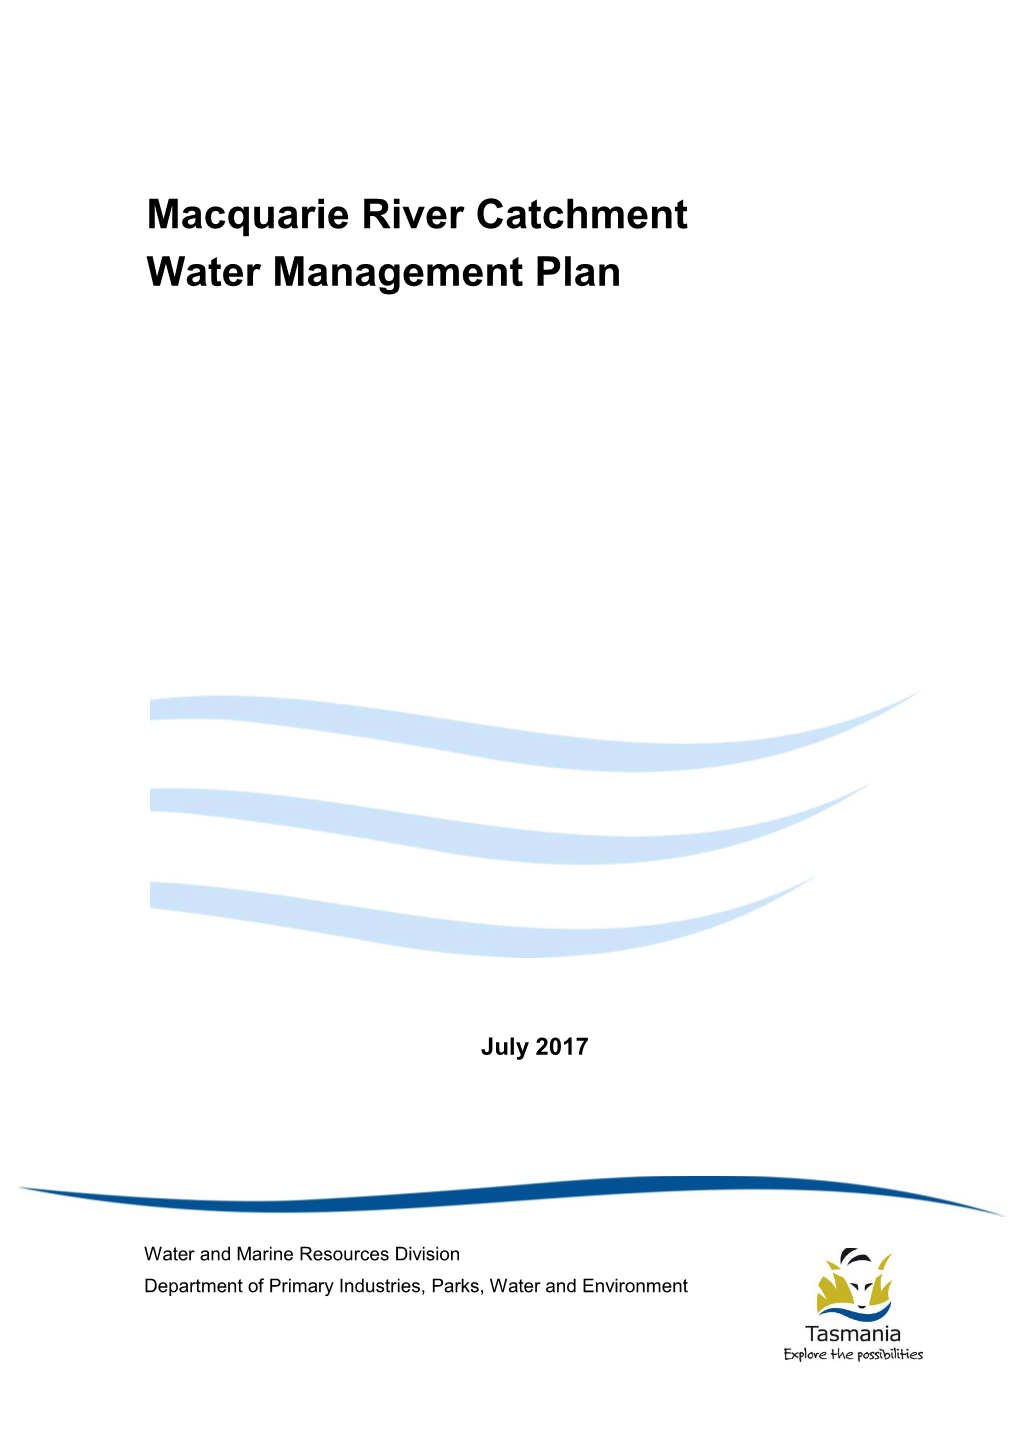 Macquarie River Catchment Water Management Plan